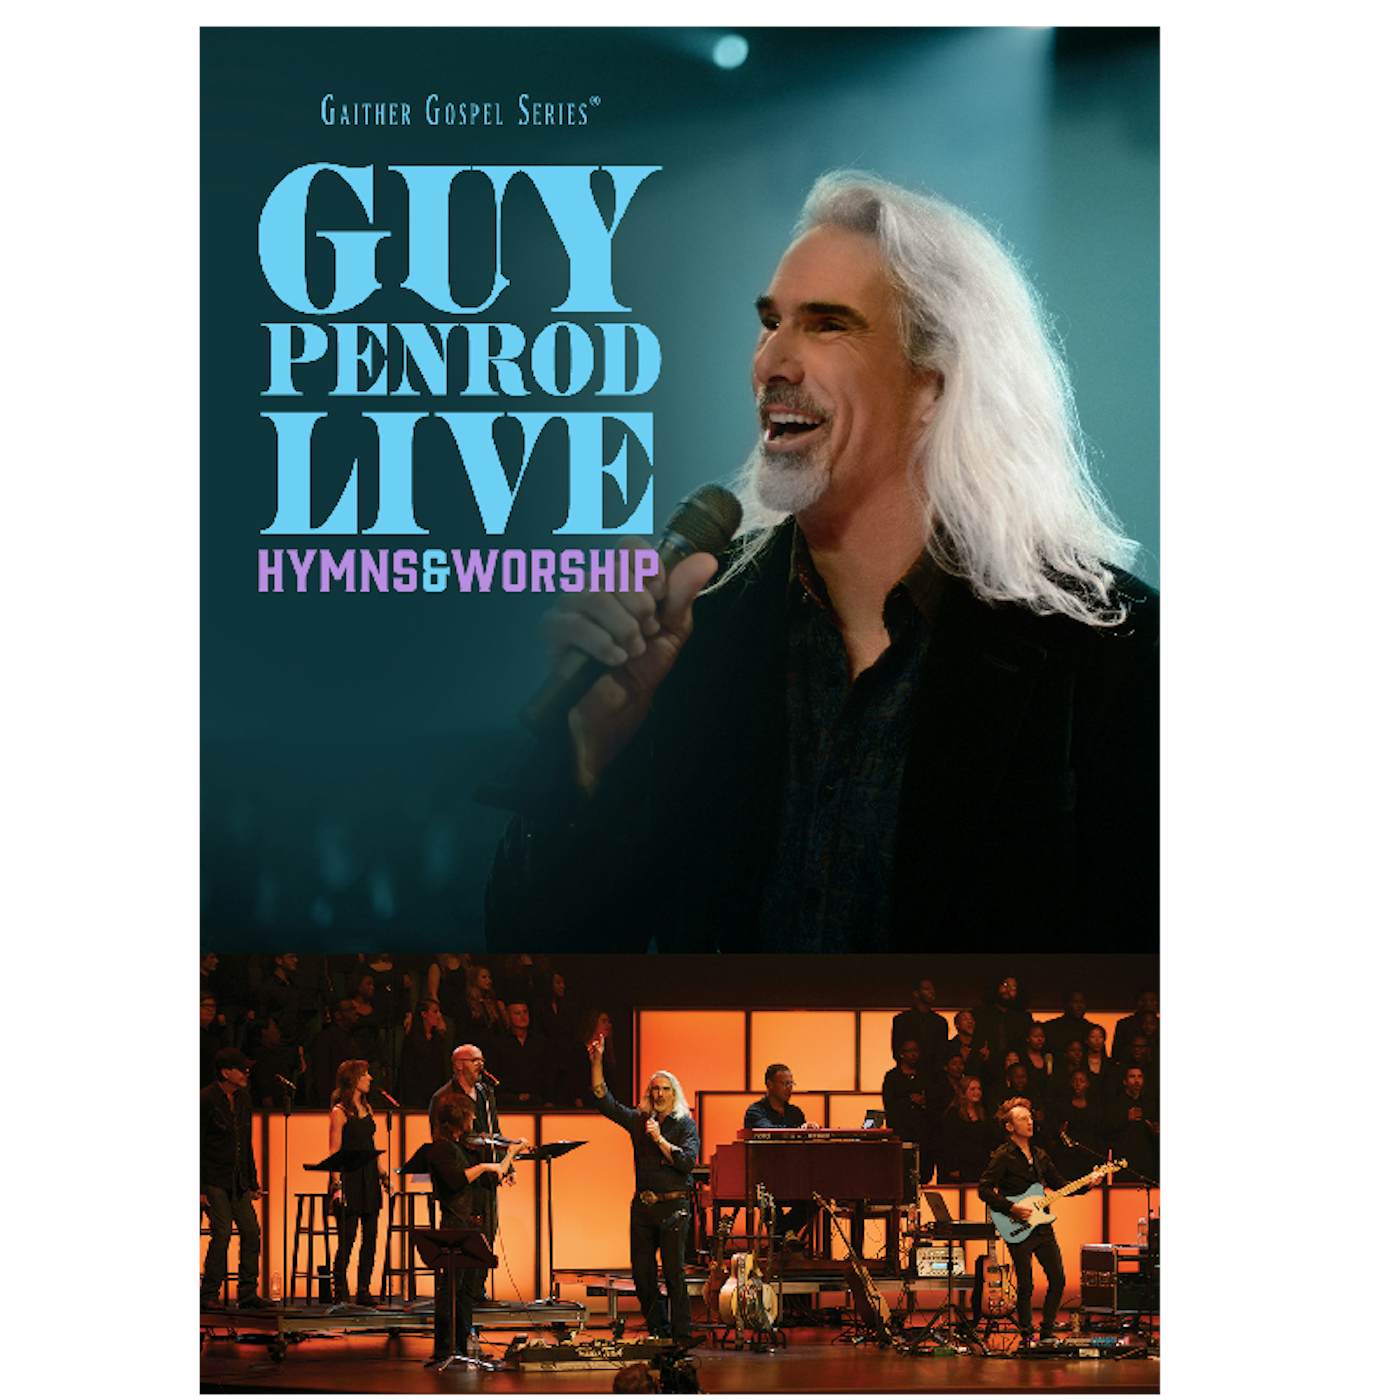 Guy Penrod LIVE DVD- Hymns and Worship